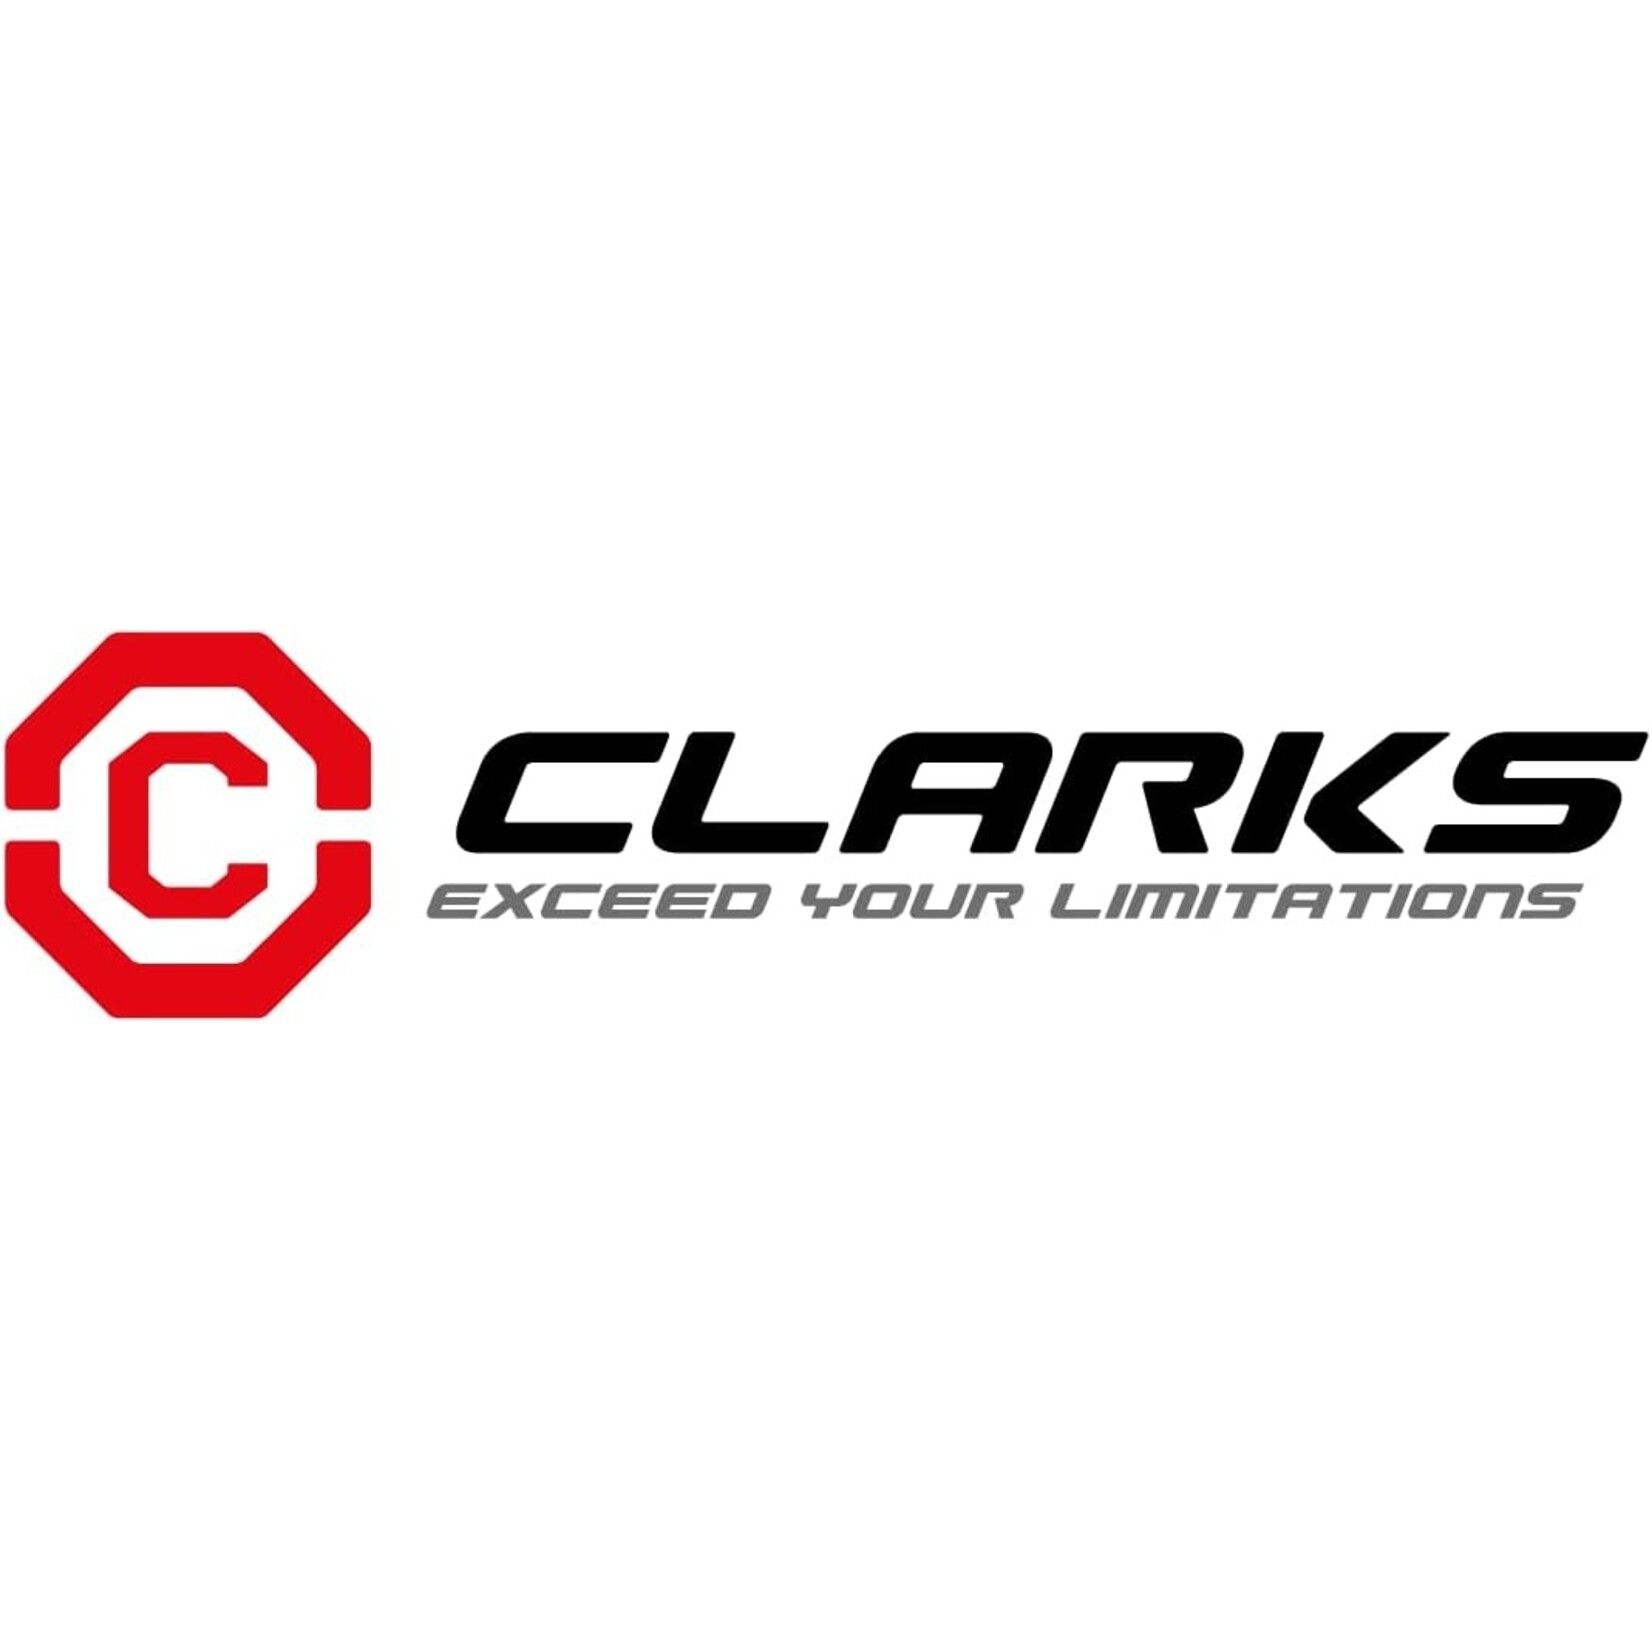 CLARKS CLARKS ORGANIC DISC BRAKE PADS FOR SHIMANO XTR/XT/SLX/M985/M785/M666/S700 ALFINE: